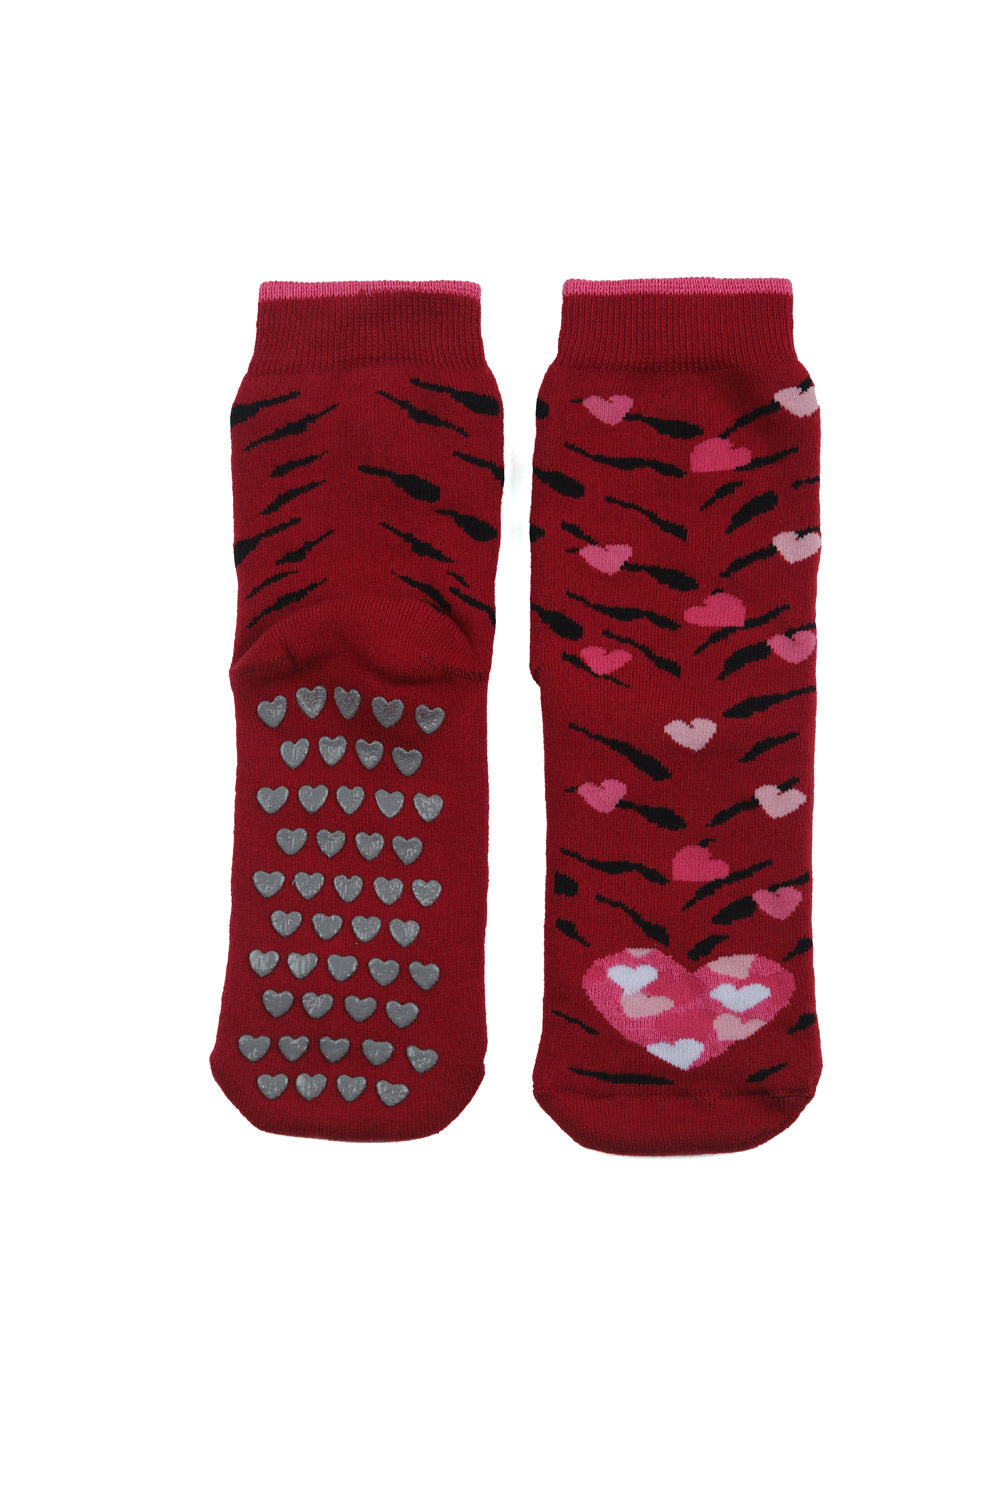 Zebra and Hearts Anti-Slip Home Socks